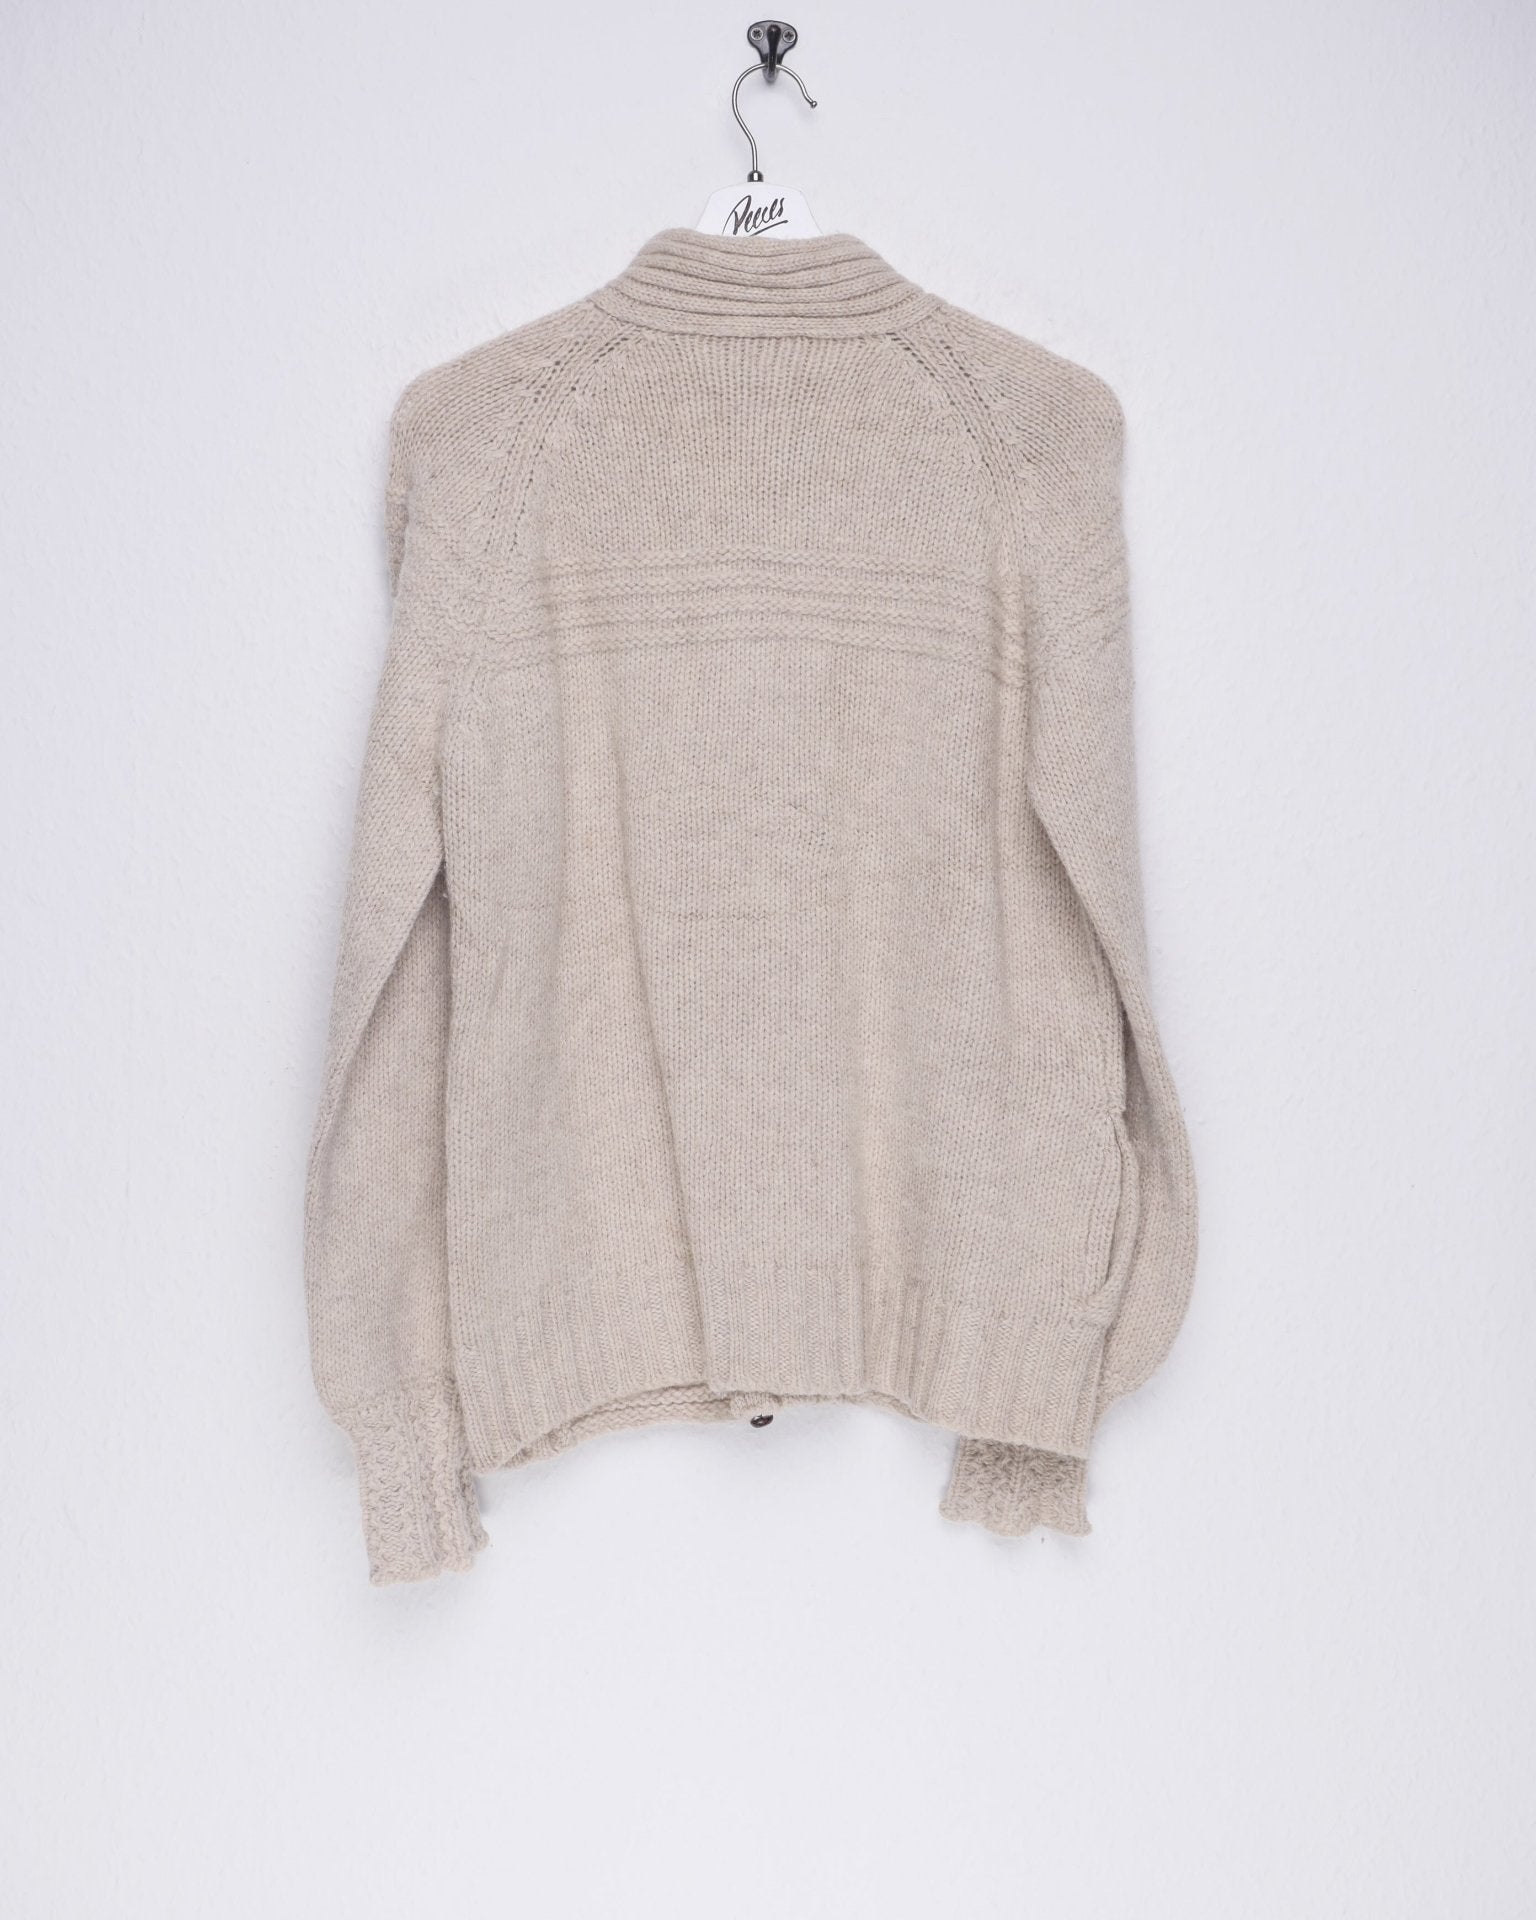 Eddie Bauer knitted beige Vintage Zip Sweater - Peeces